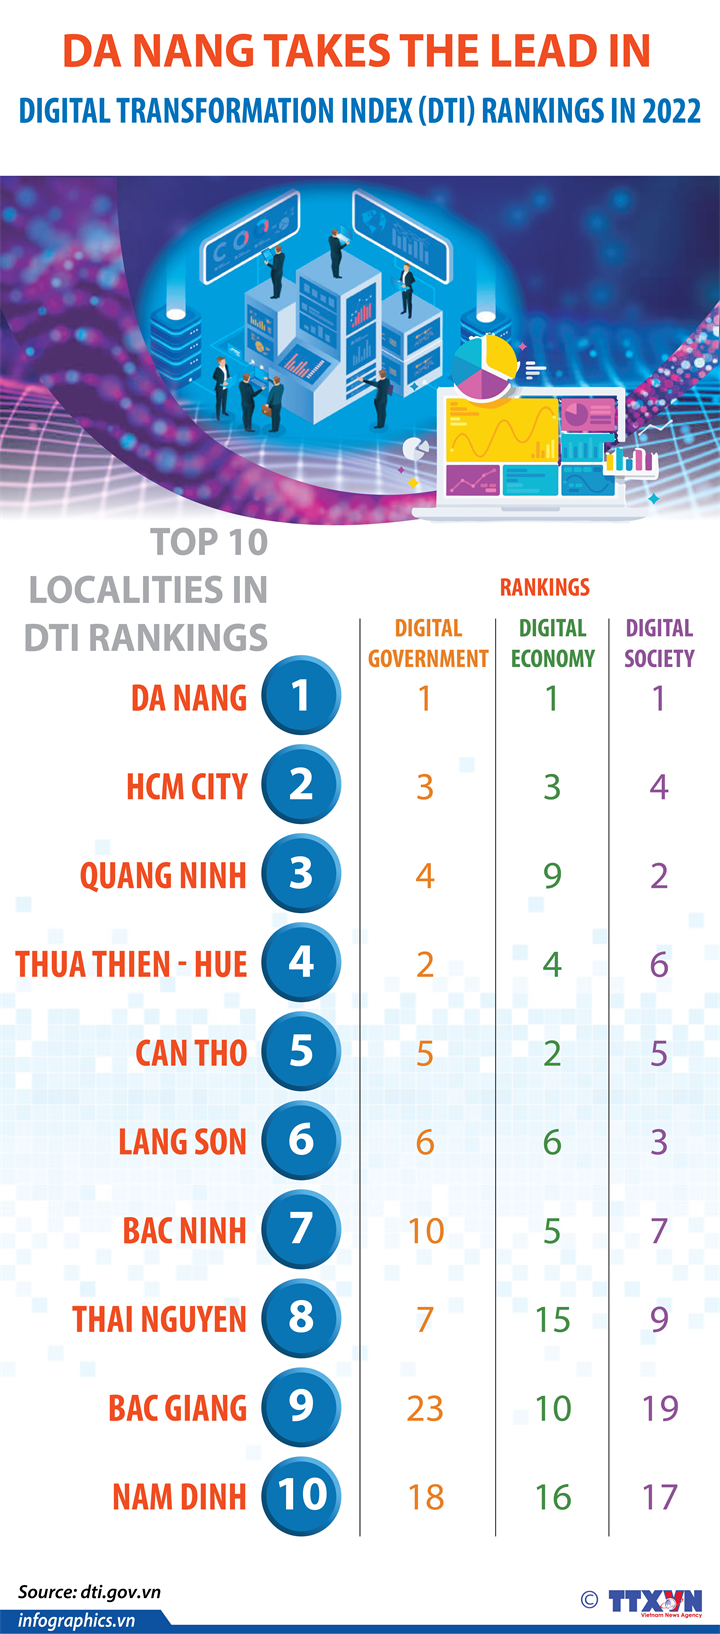 Da Nang takes the lead in digital transformation rankings